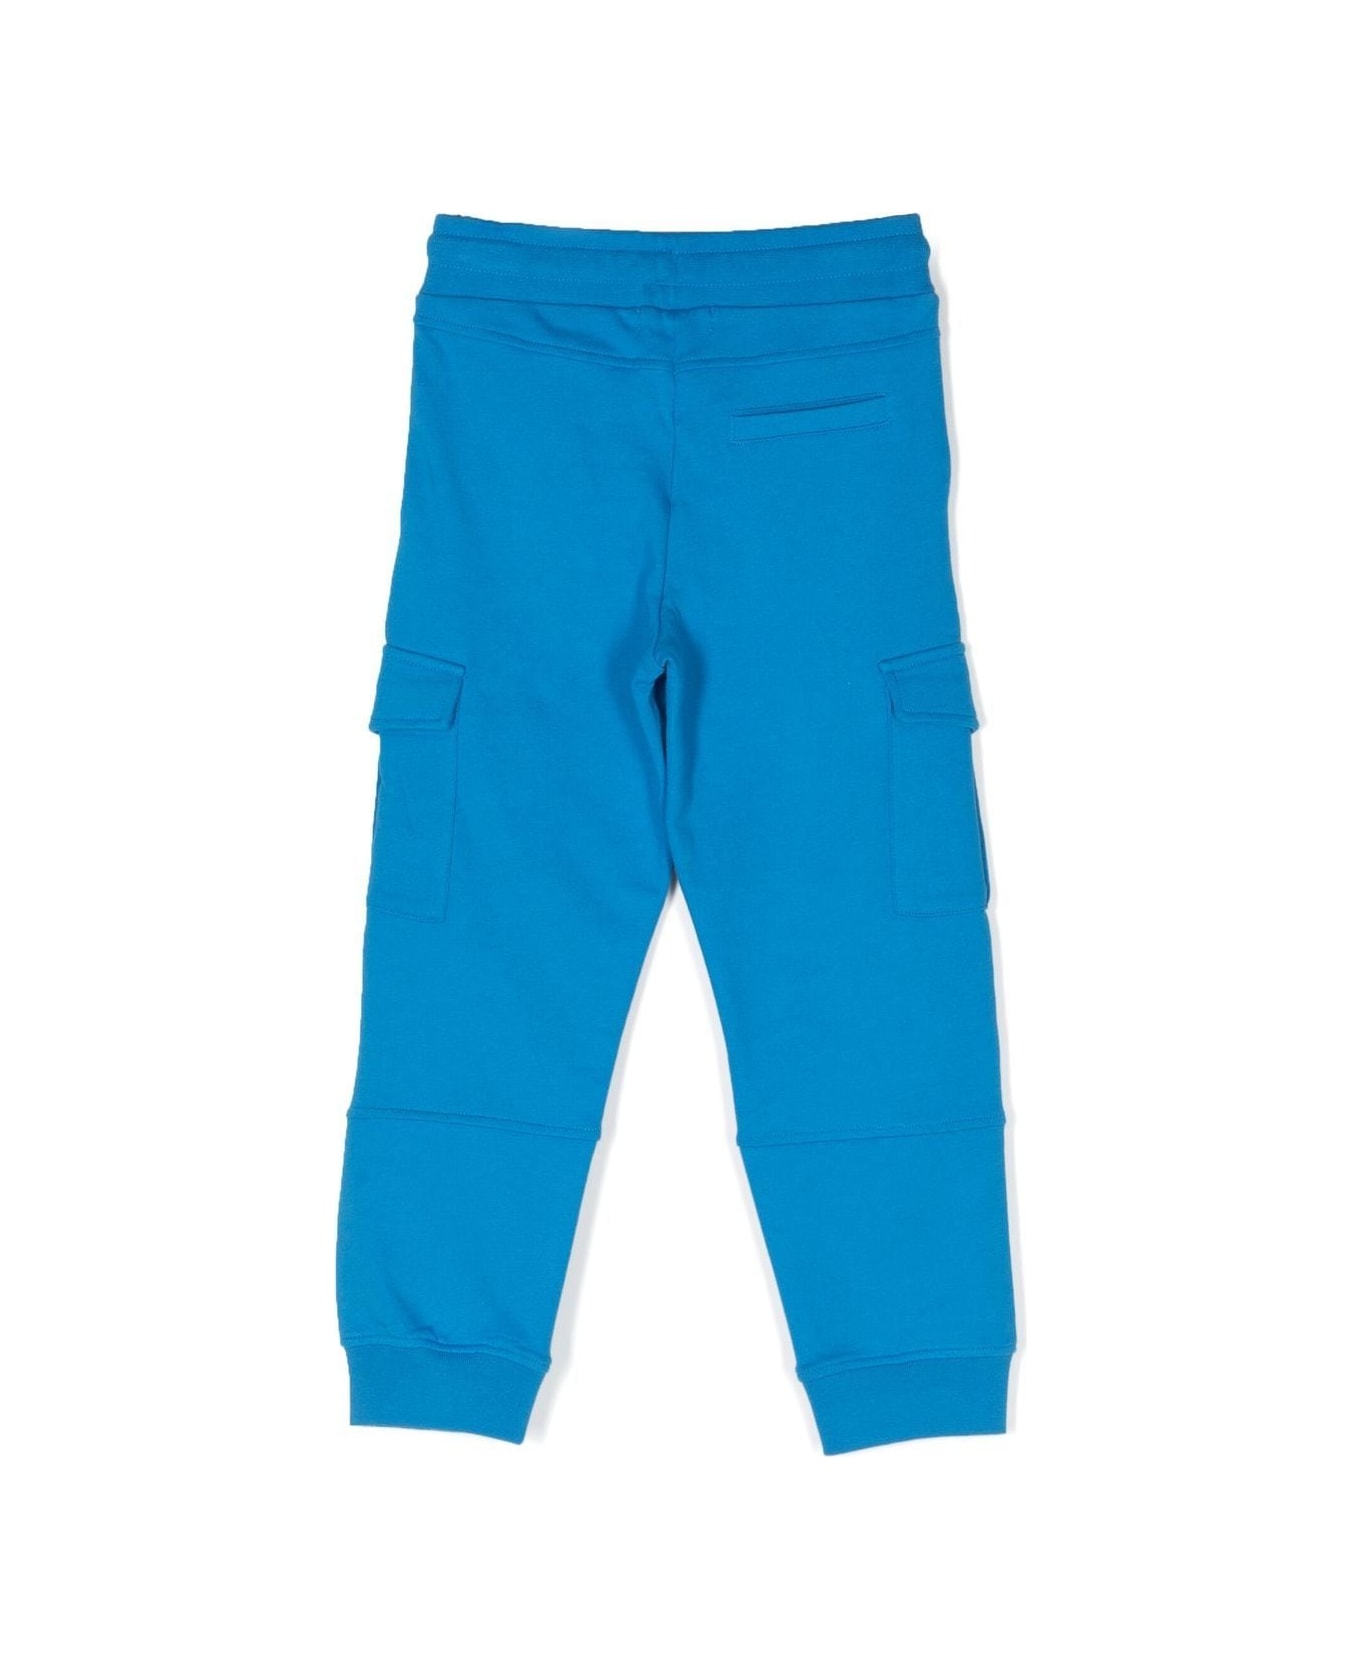 Stella McCartney Blue Cotton Pants - AZURE/BLUE